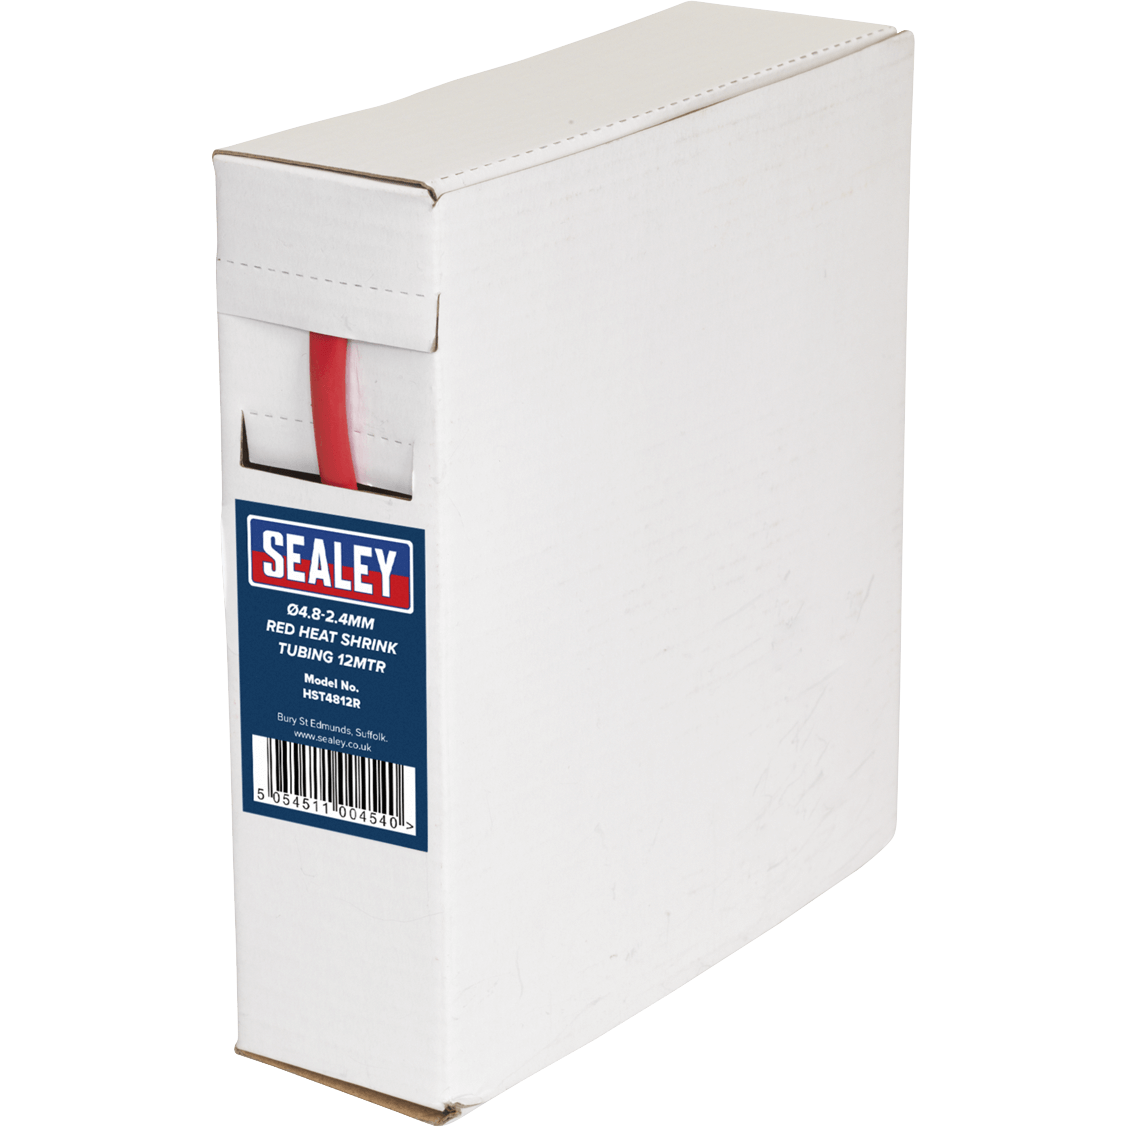 Sealey Heat Shrink Tubing Roll Red 4.8mm - 2.4mm 12m